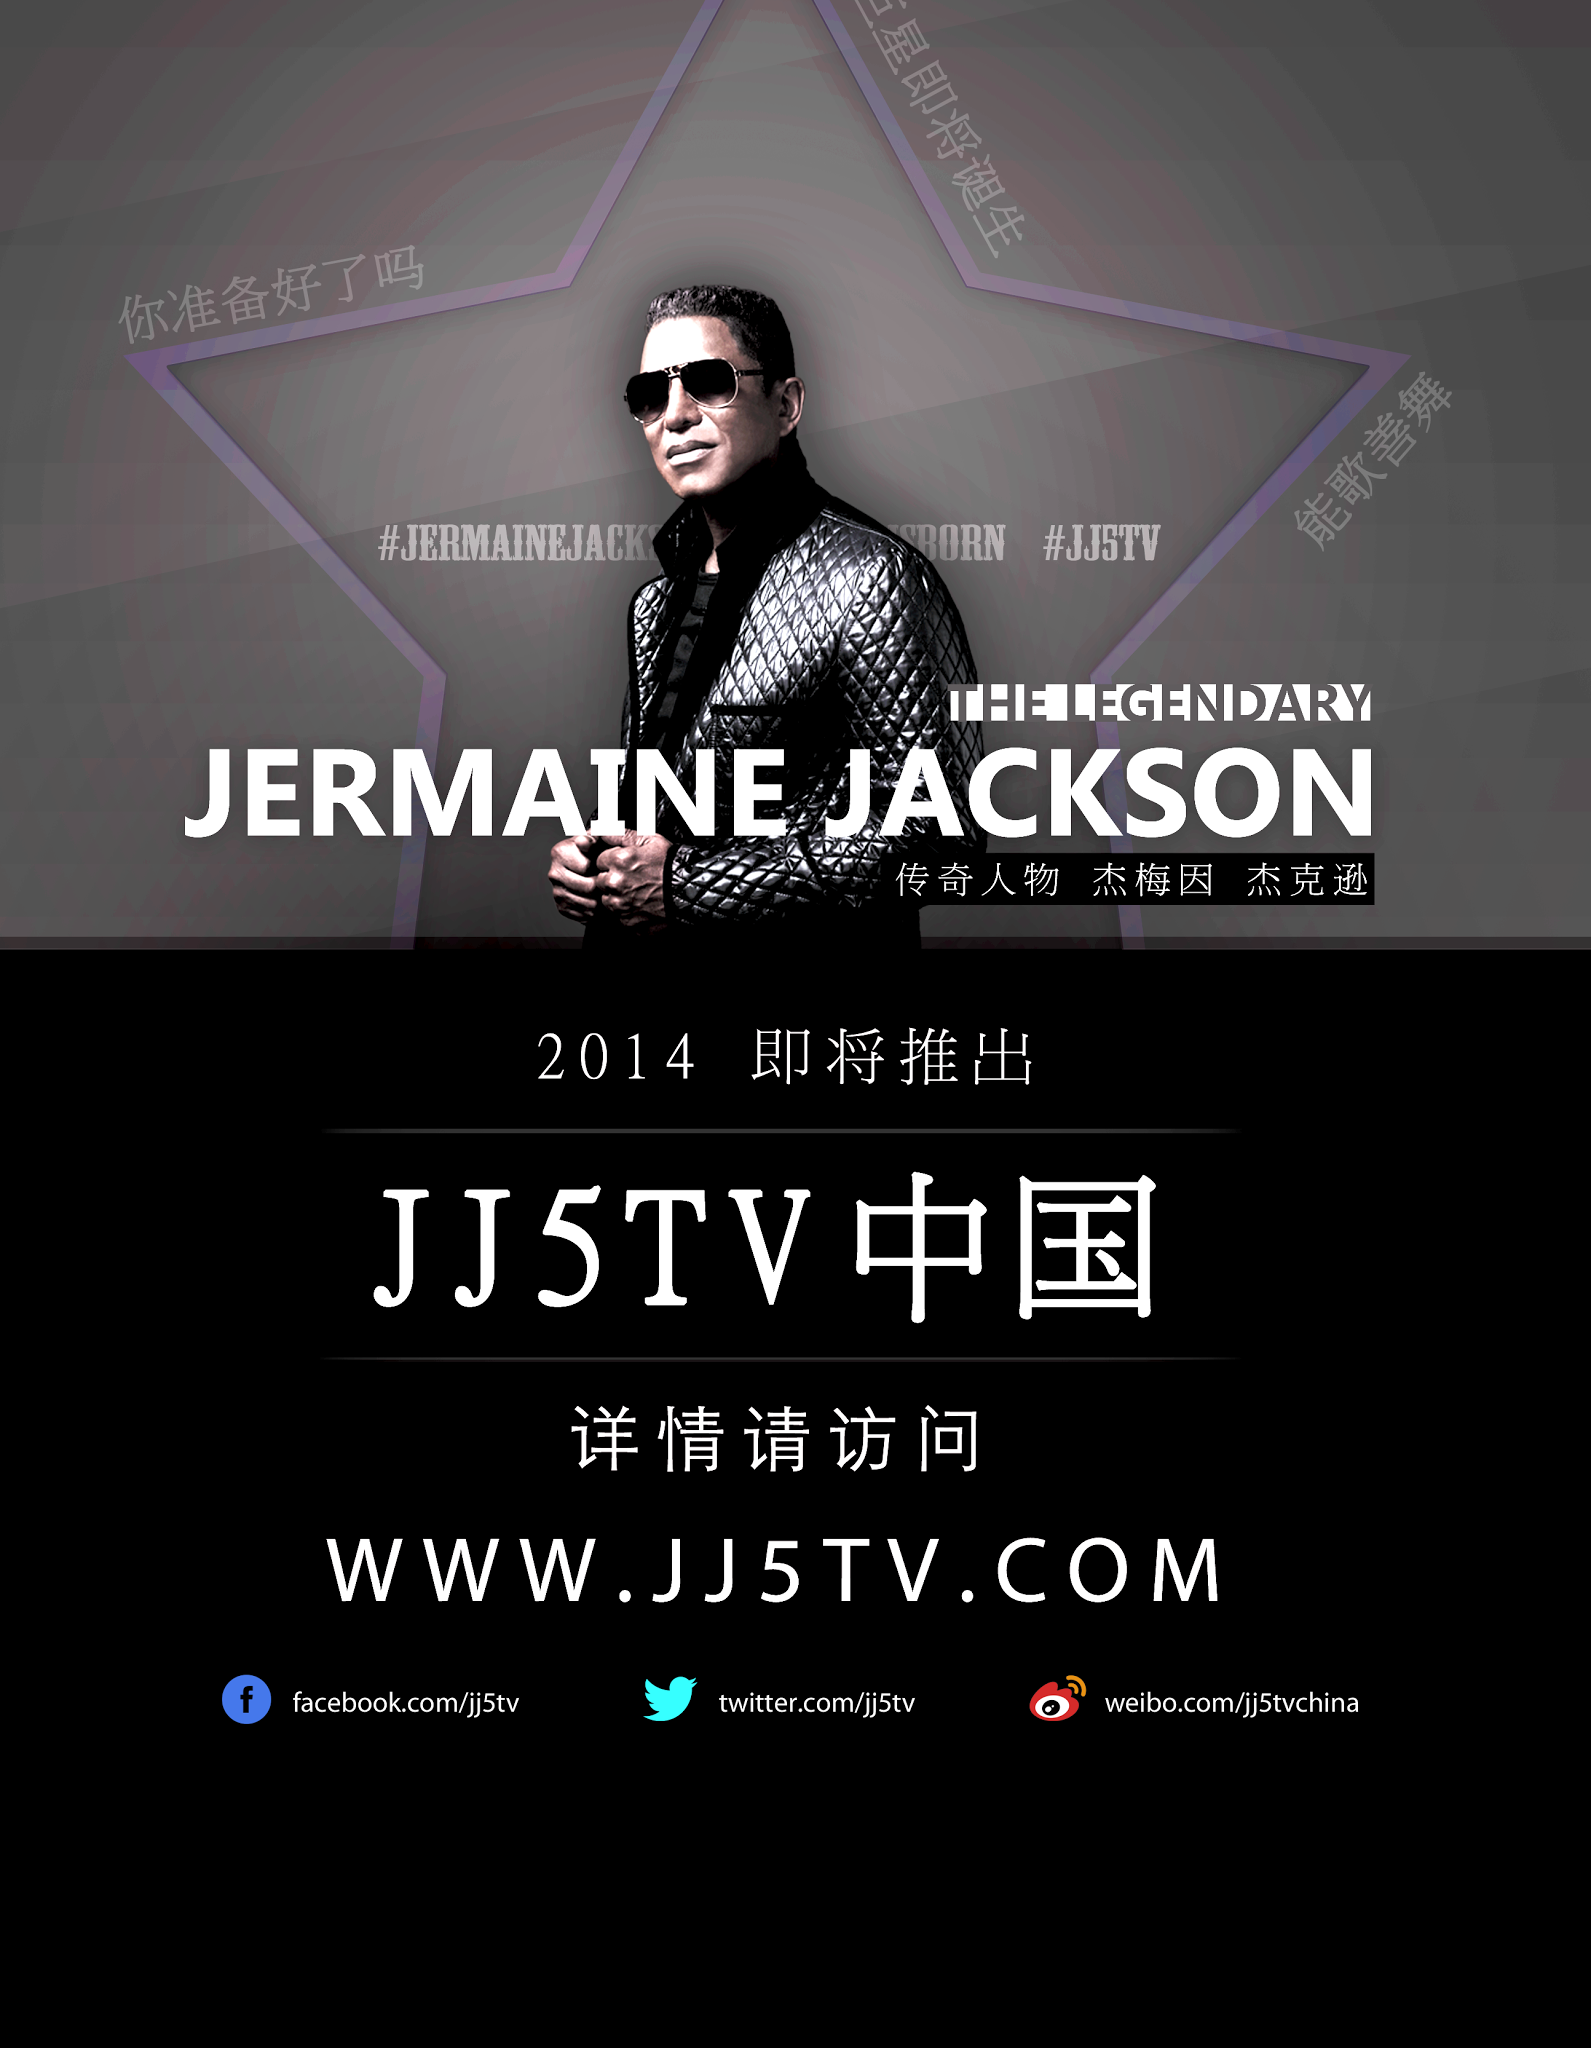 JJ5TV_CHINA.png